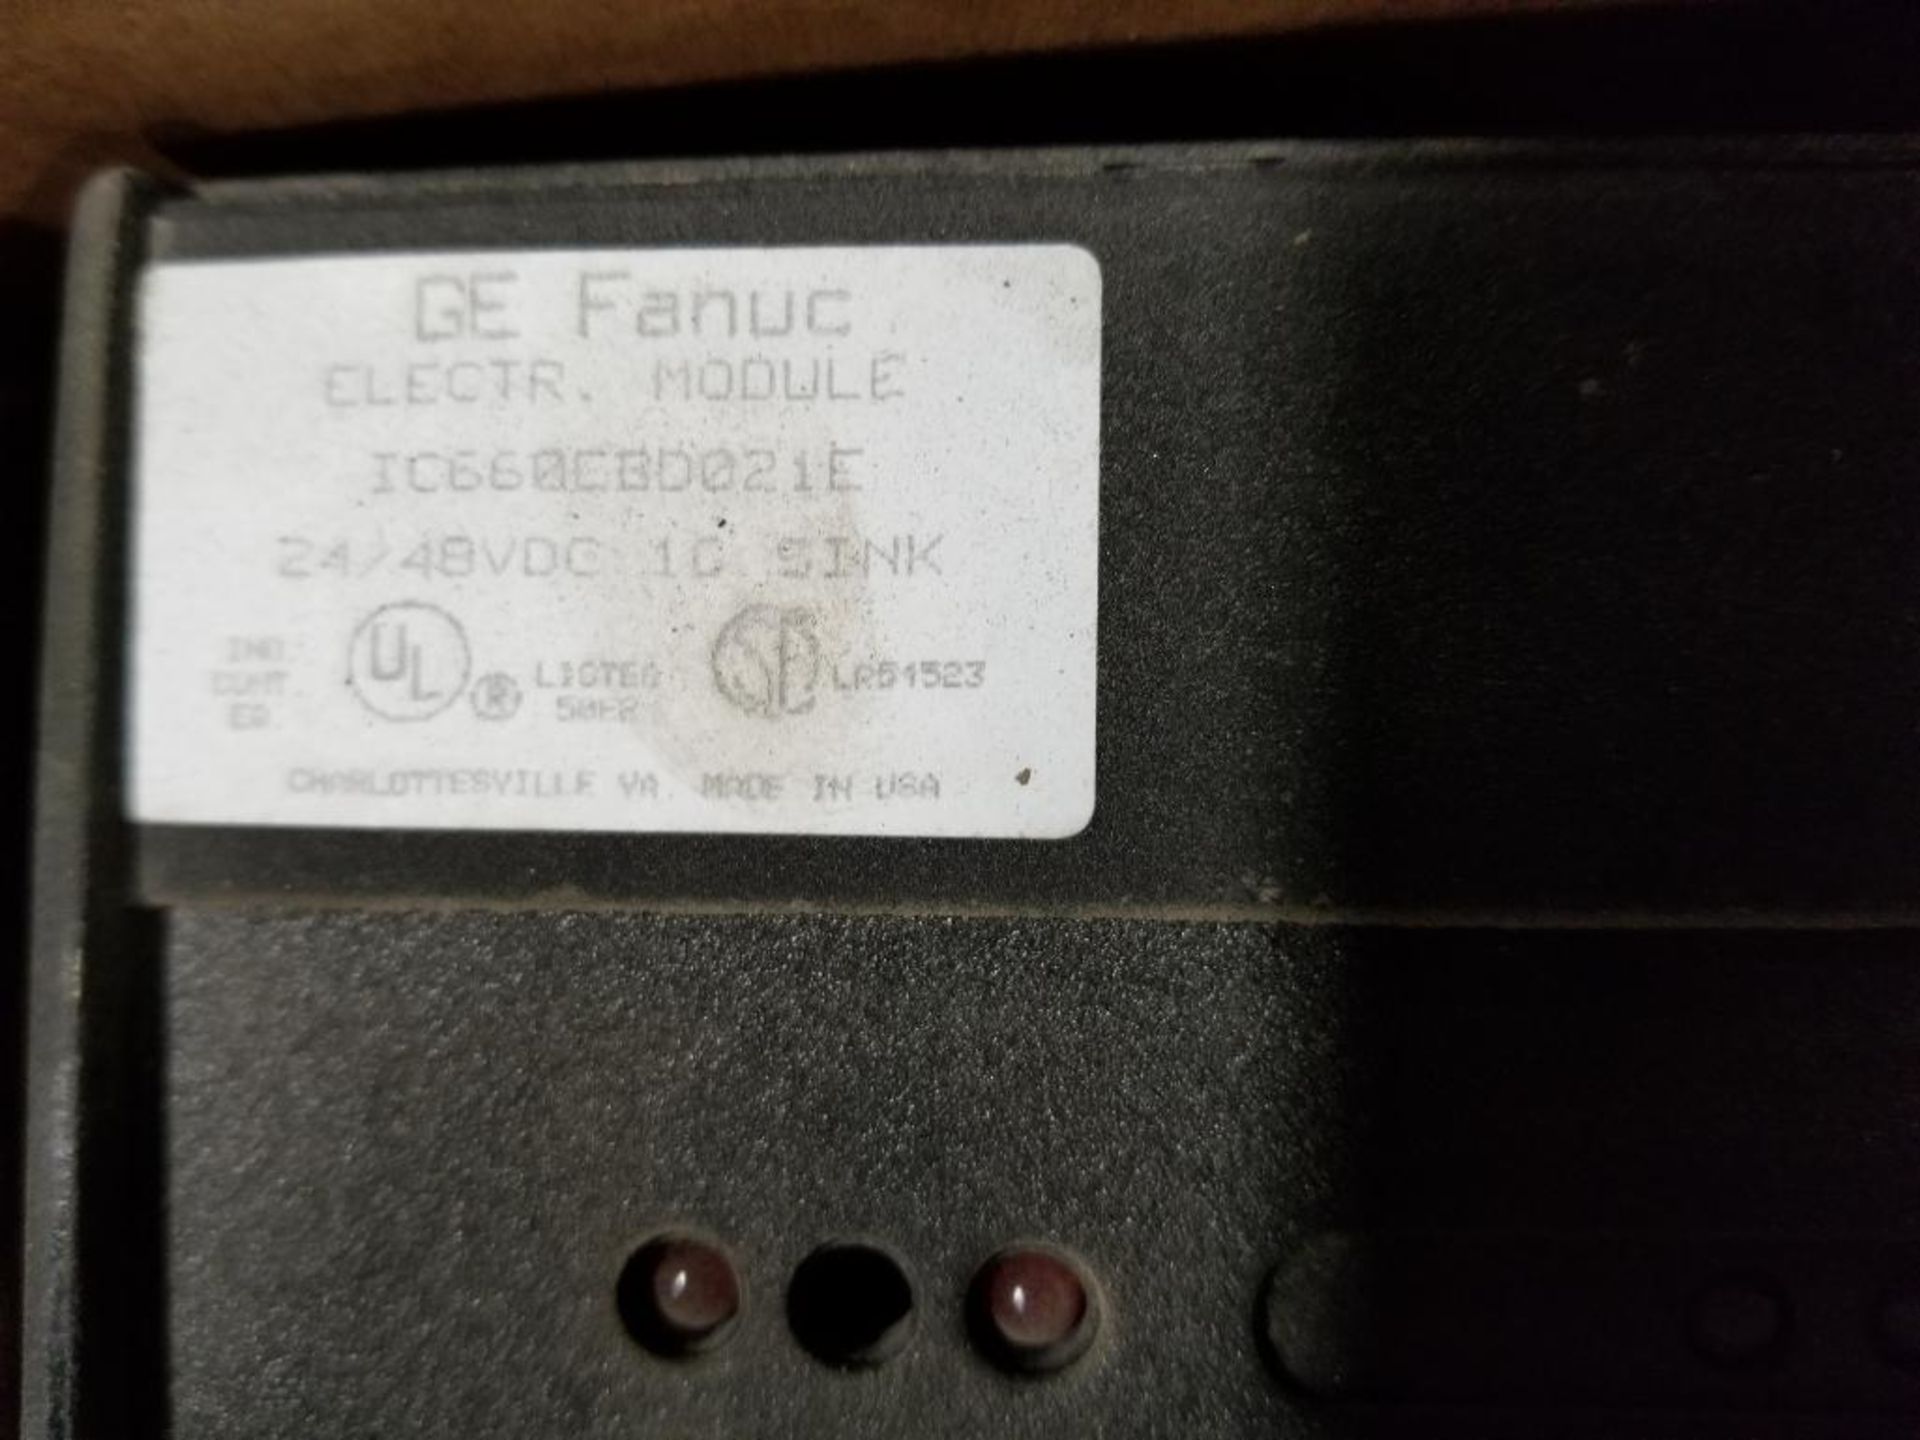 Qty 2 - GE Fanuc Genius 24/48 VDC Sink I/O module IC660EBD021E. - Image 5 of 6